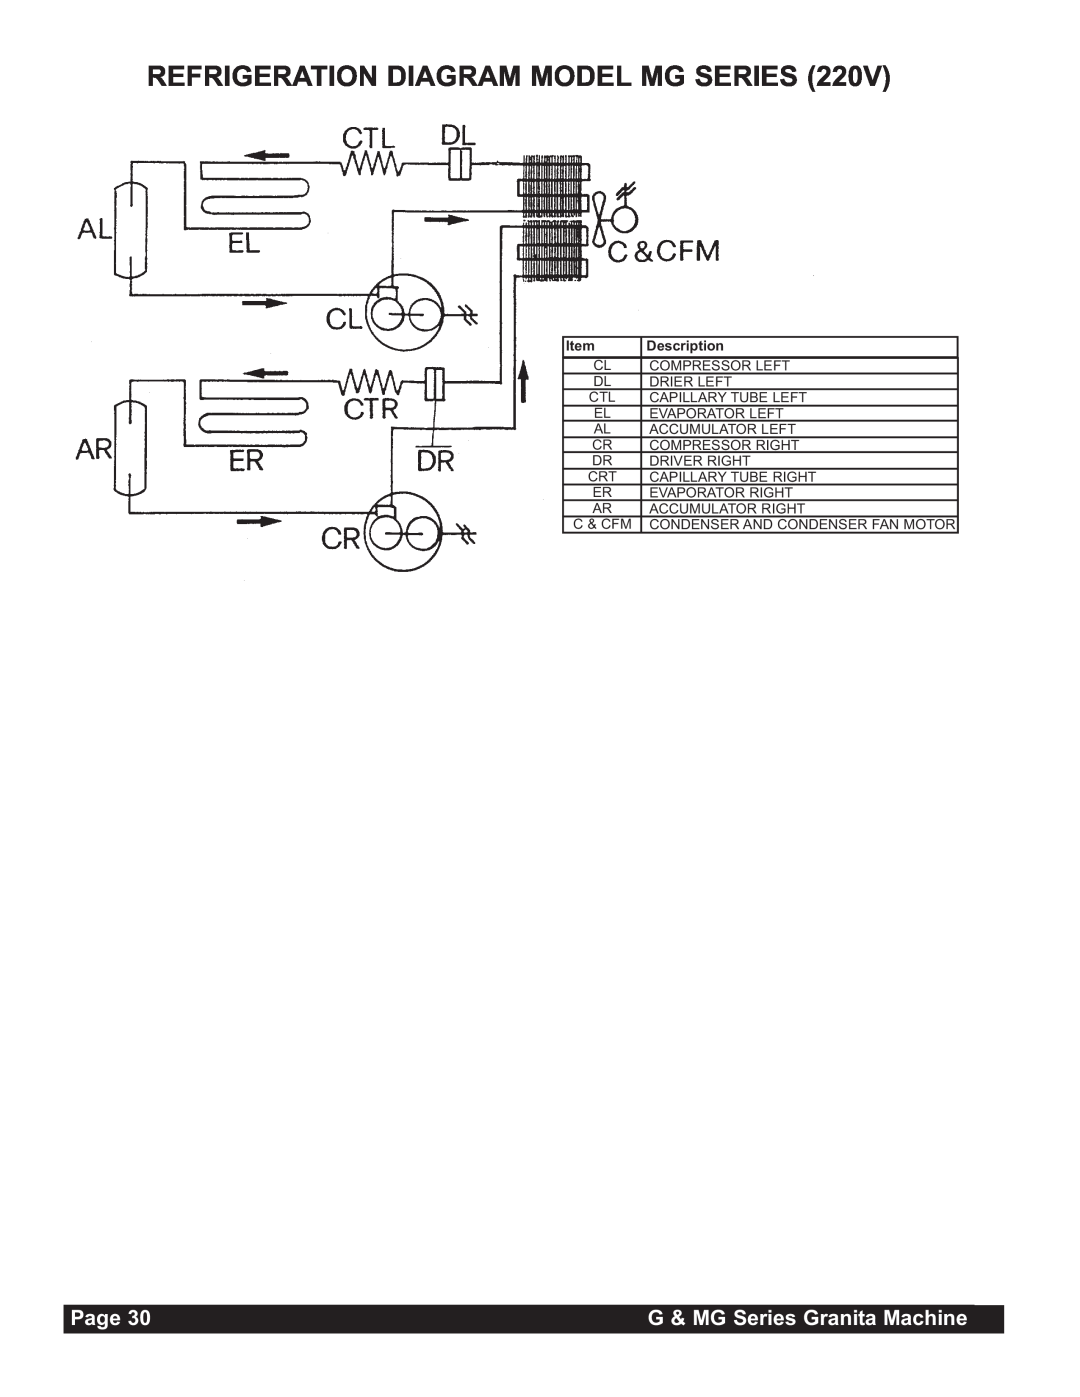 Grindmaster MG236-2B, MG23-2B Refrigeration Diagram Model Mg Series, Page, G & MG Series Granita Machine, Description 